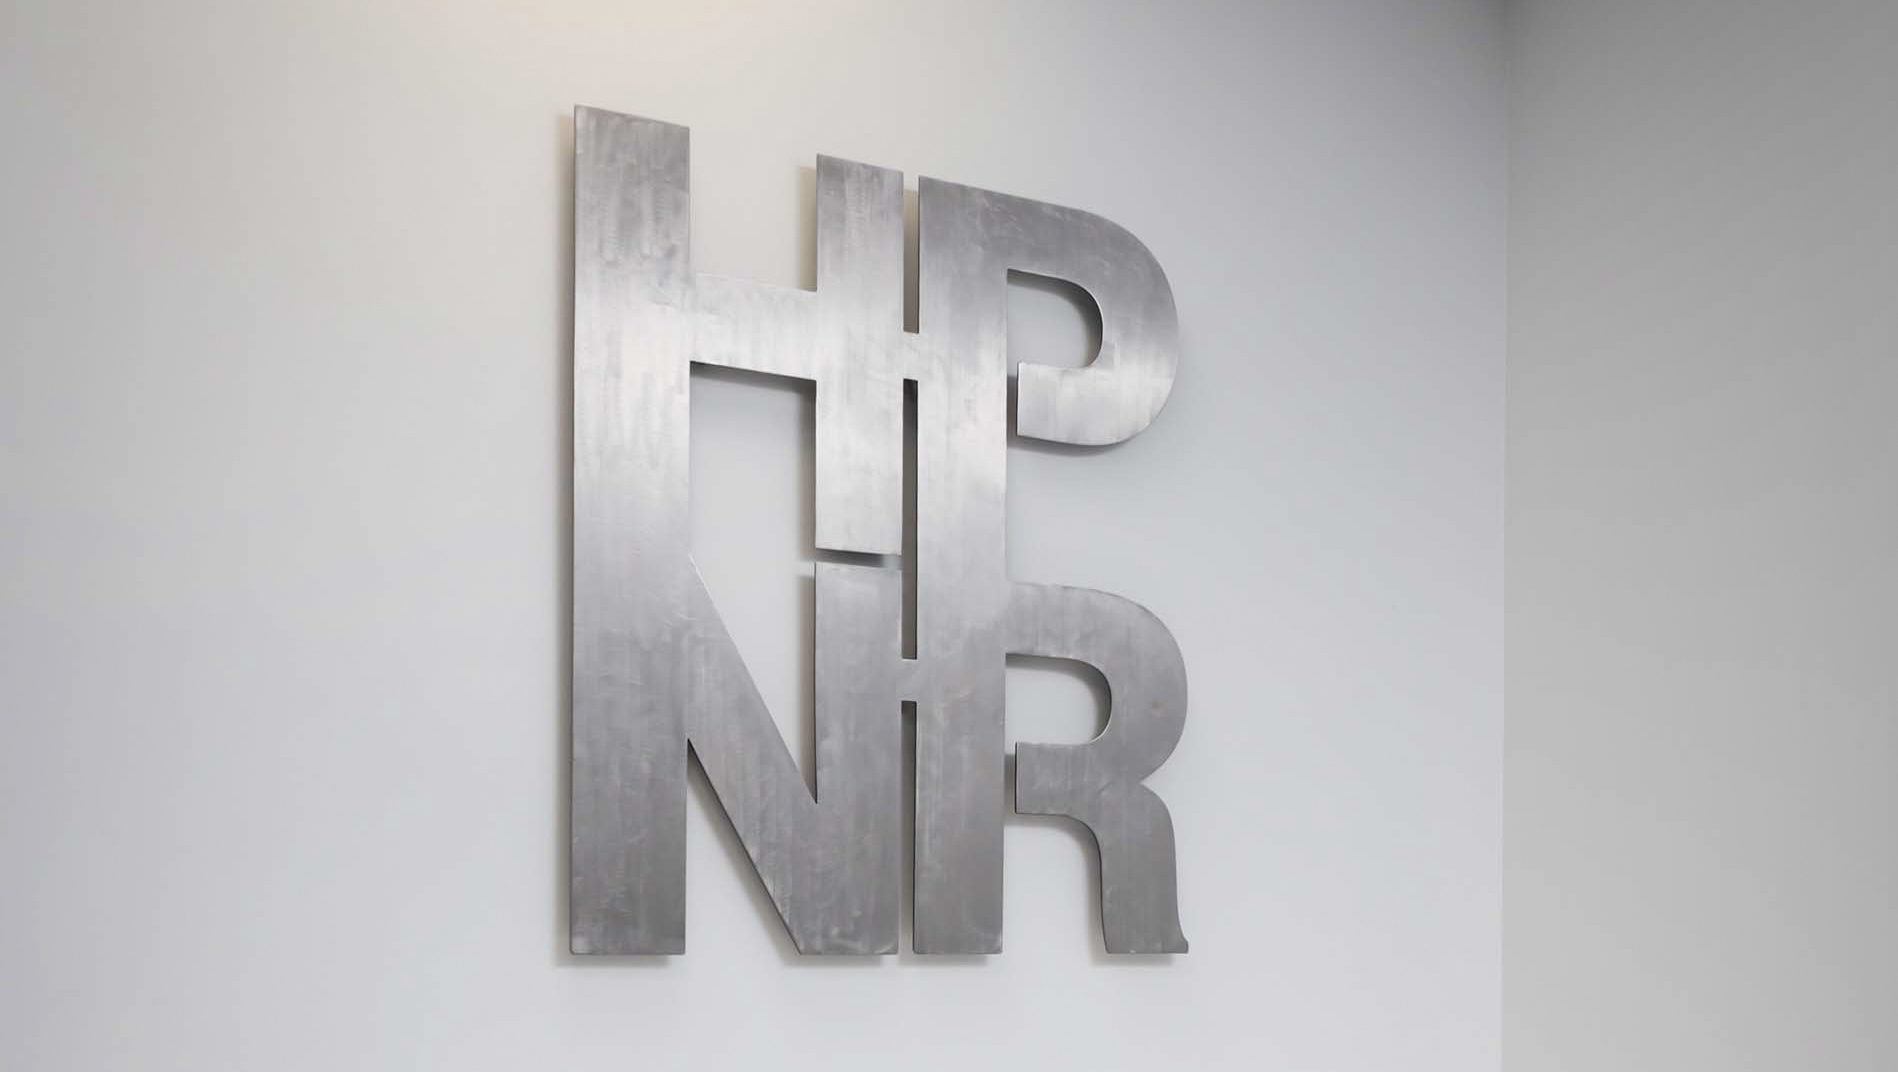 Halle Porter Newland & Rickett logo signage on wall